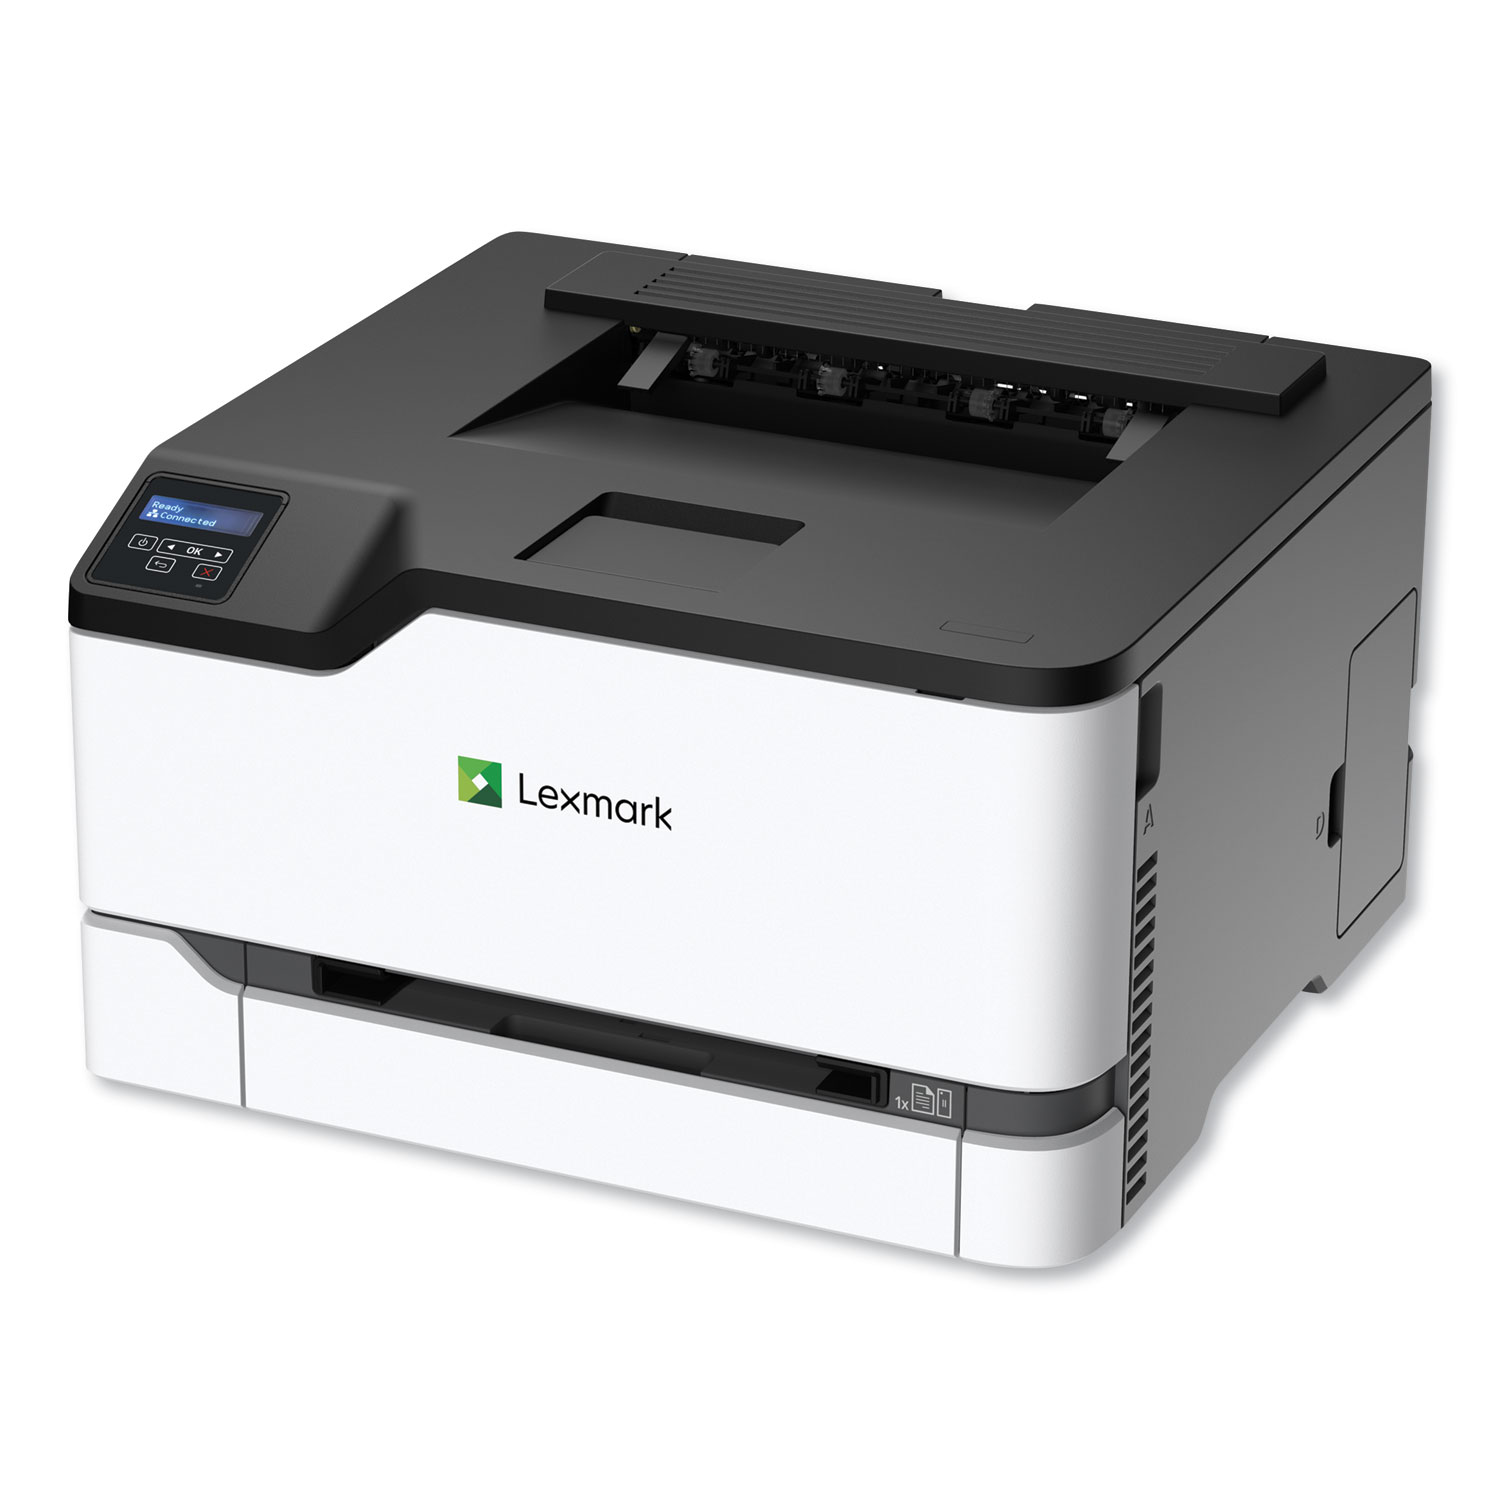  Lexmark 40N9010 C3326dw Wireless Color Laser Printer (LEX40N9010) 